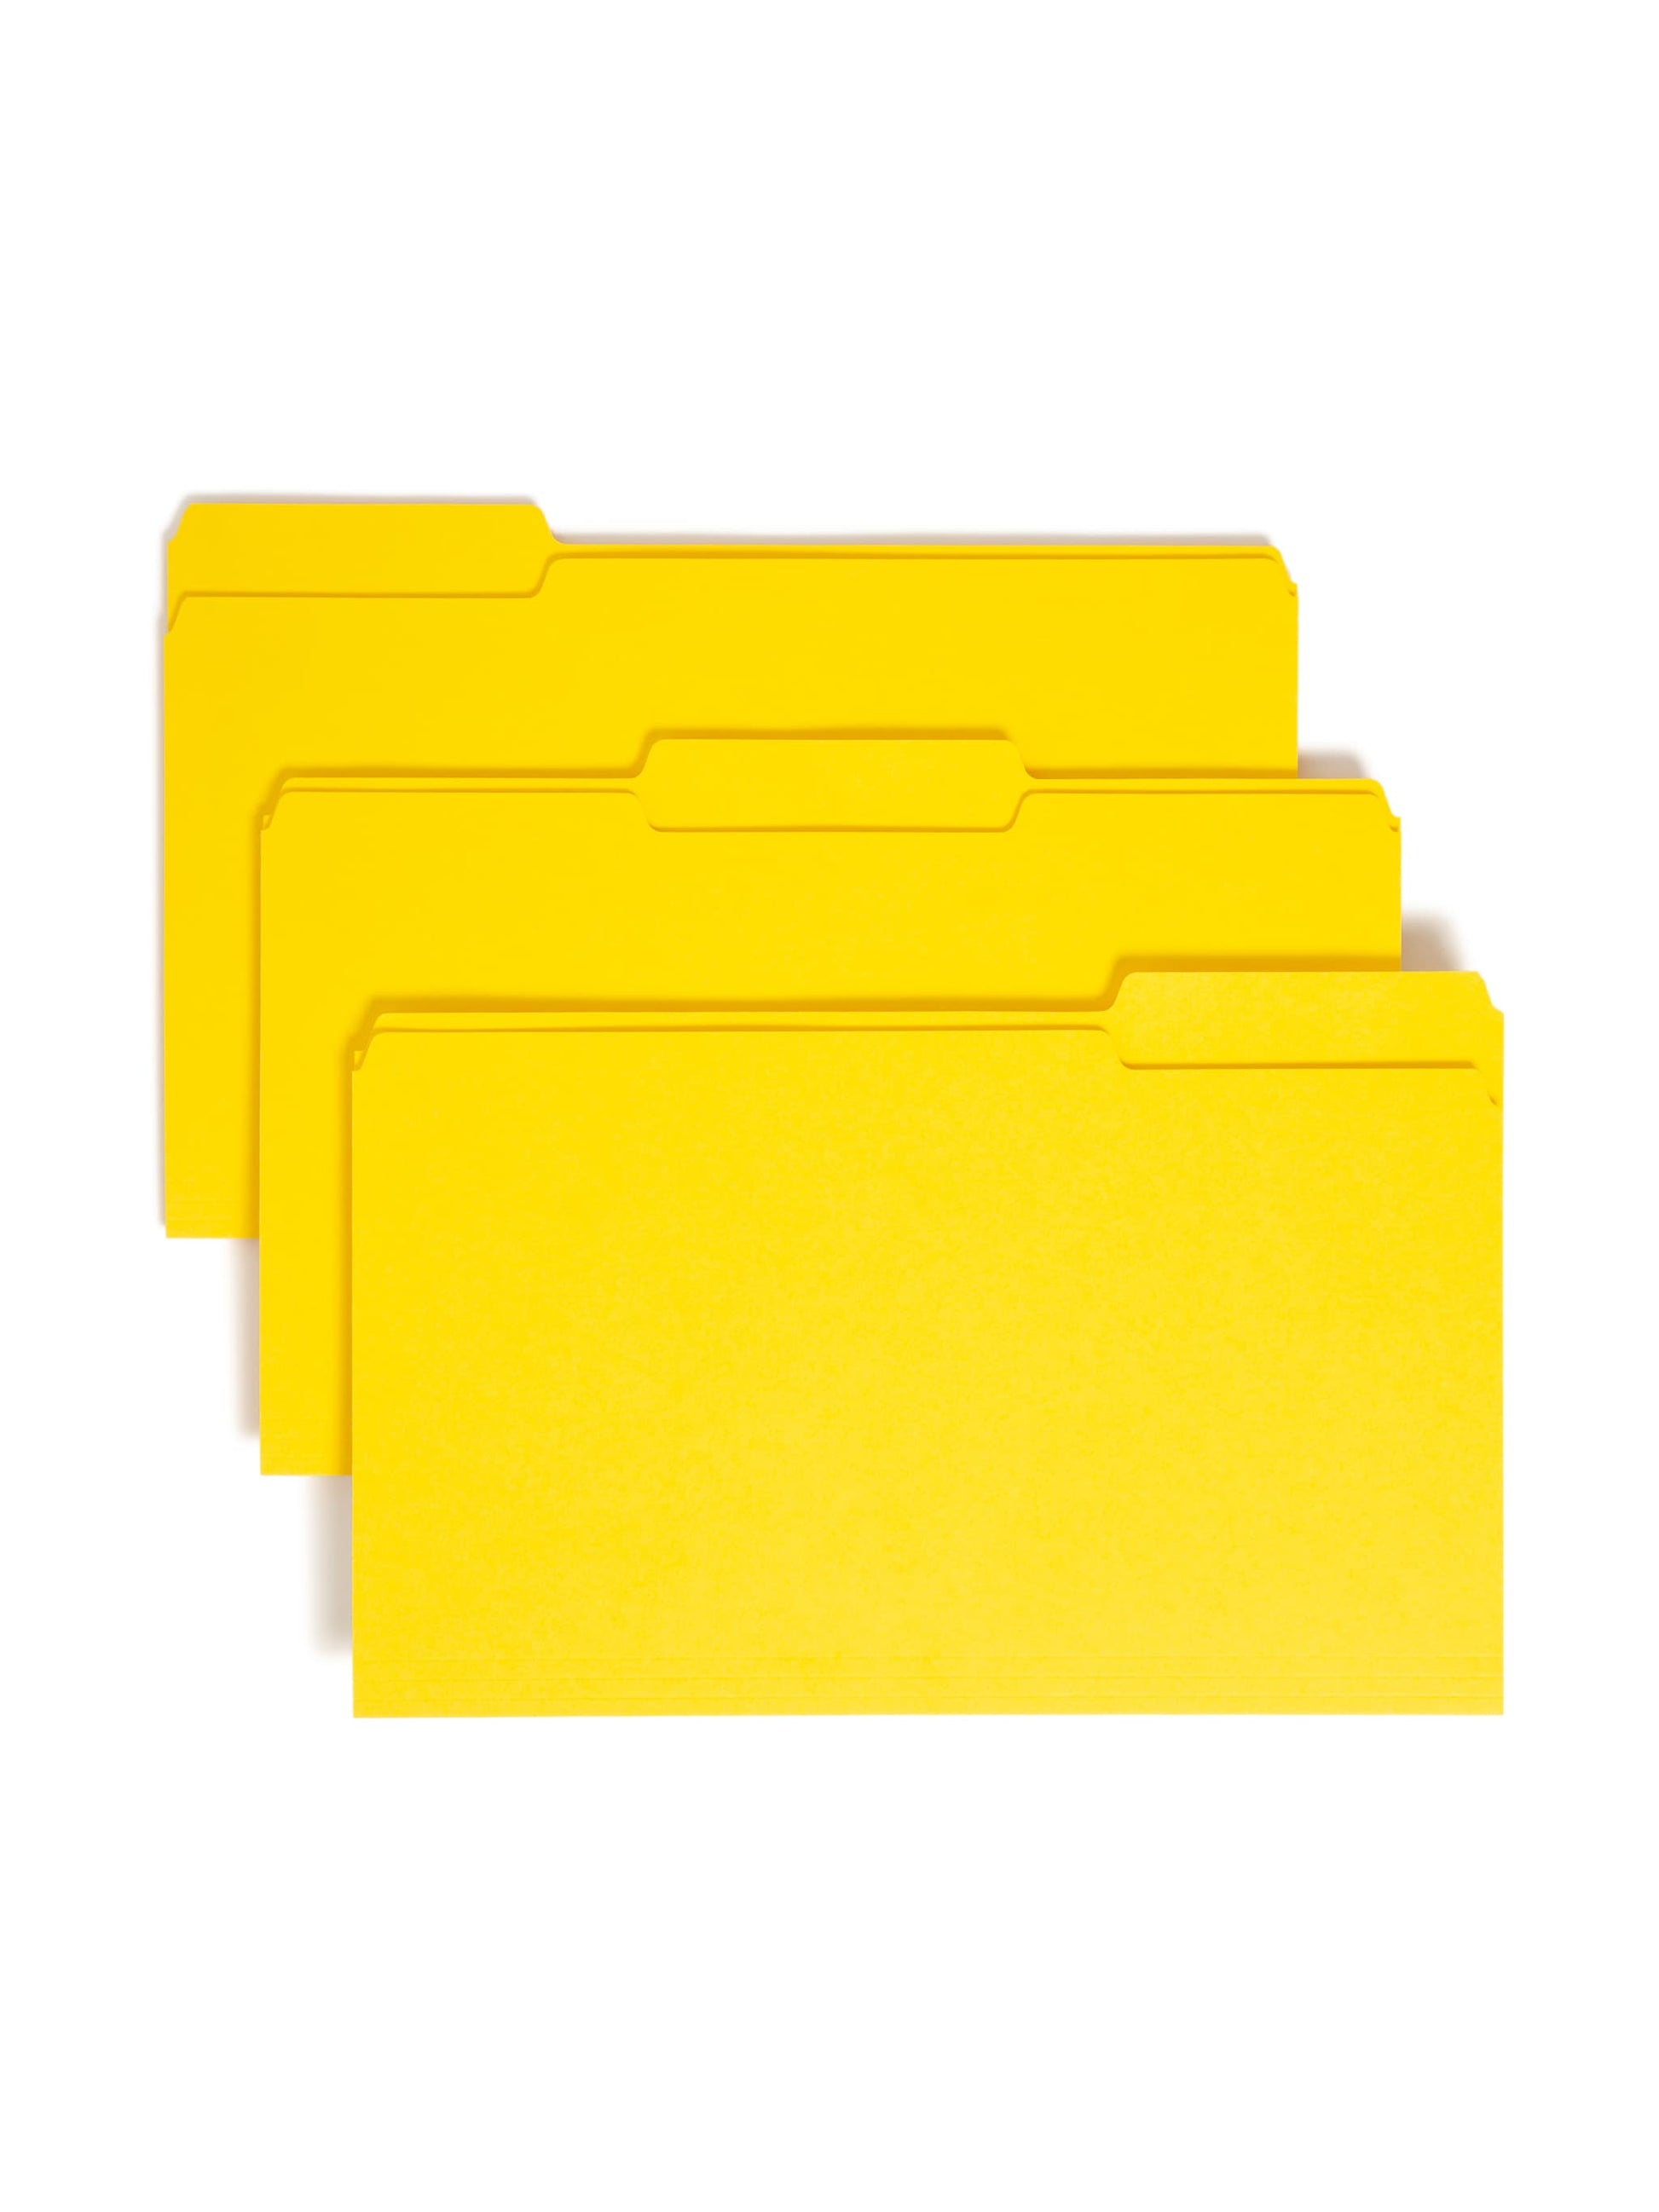 Standard File Folders, 1/3-Cut Tab, Yellow Color, Legal Size, Set of 100, 086486179430